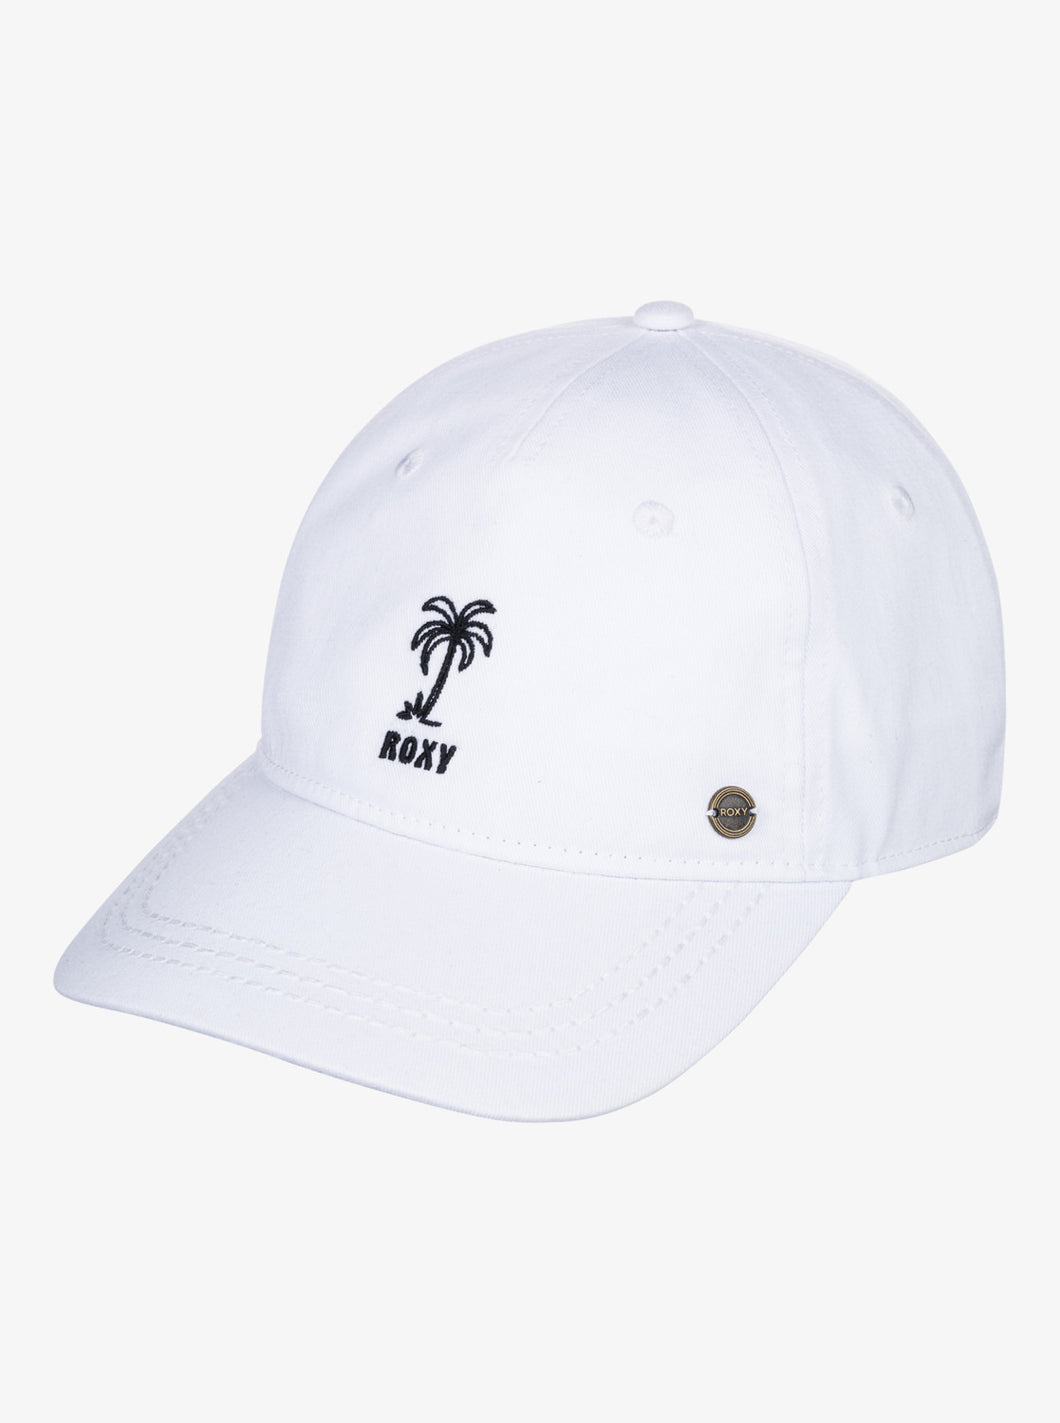 Roxy “Next Level” Palm Tree Logo Baseball Cap in White